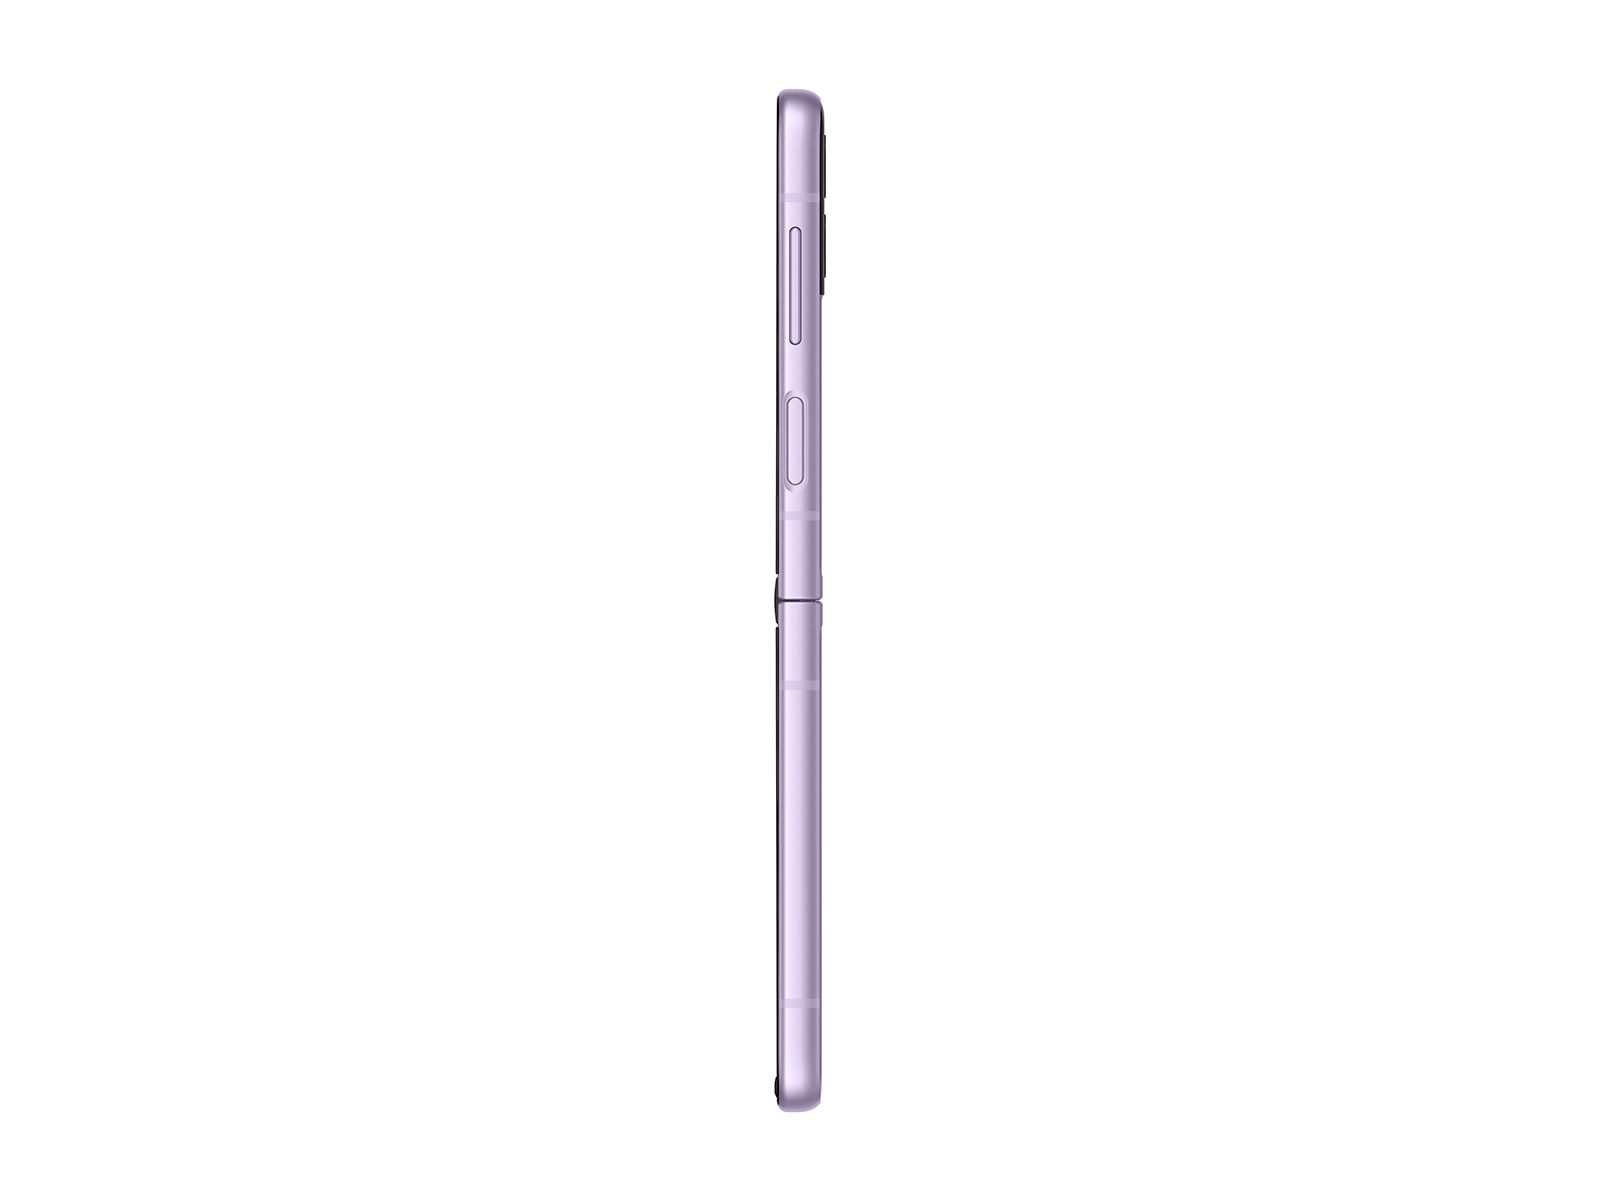 SM-F711ULVBXAU | Galaxy Z Flip3 5G 128GB (T-Mobile) Lavender